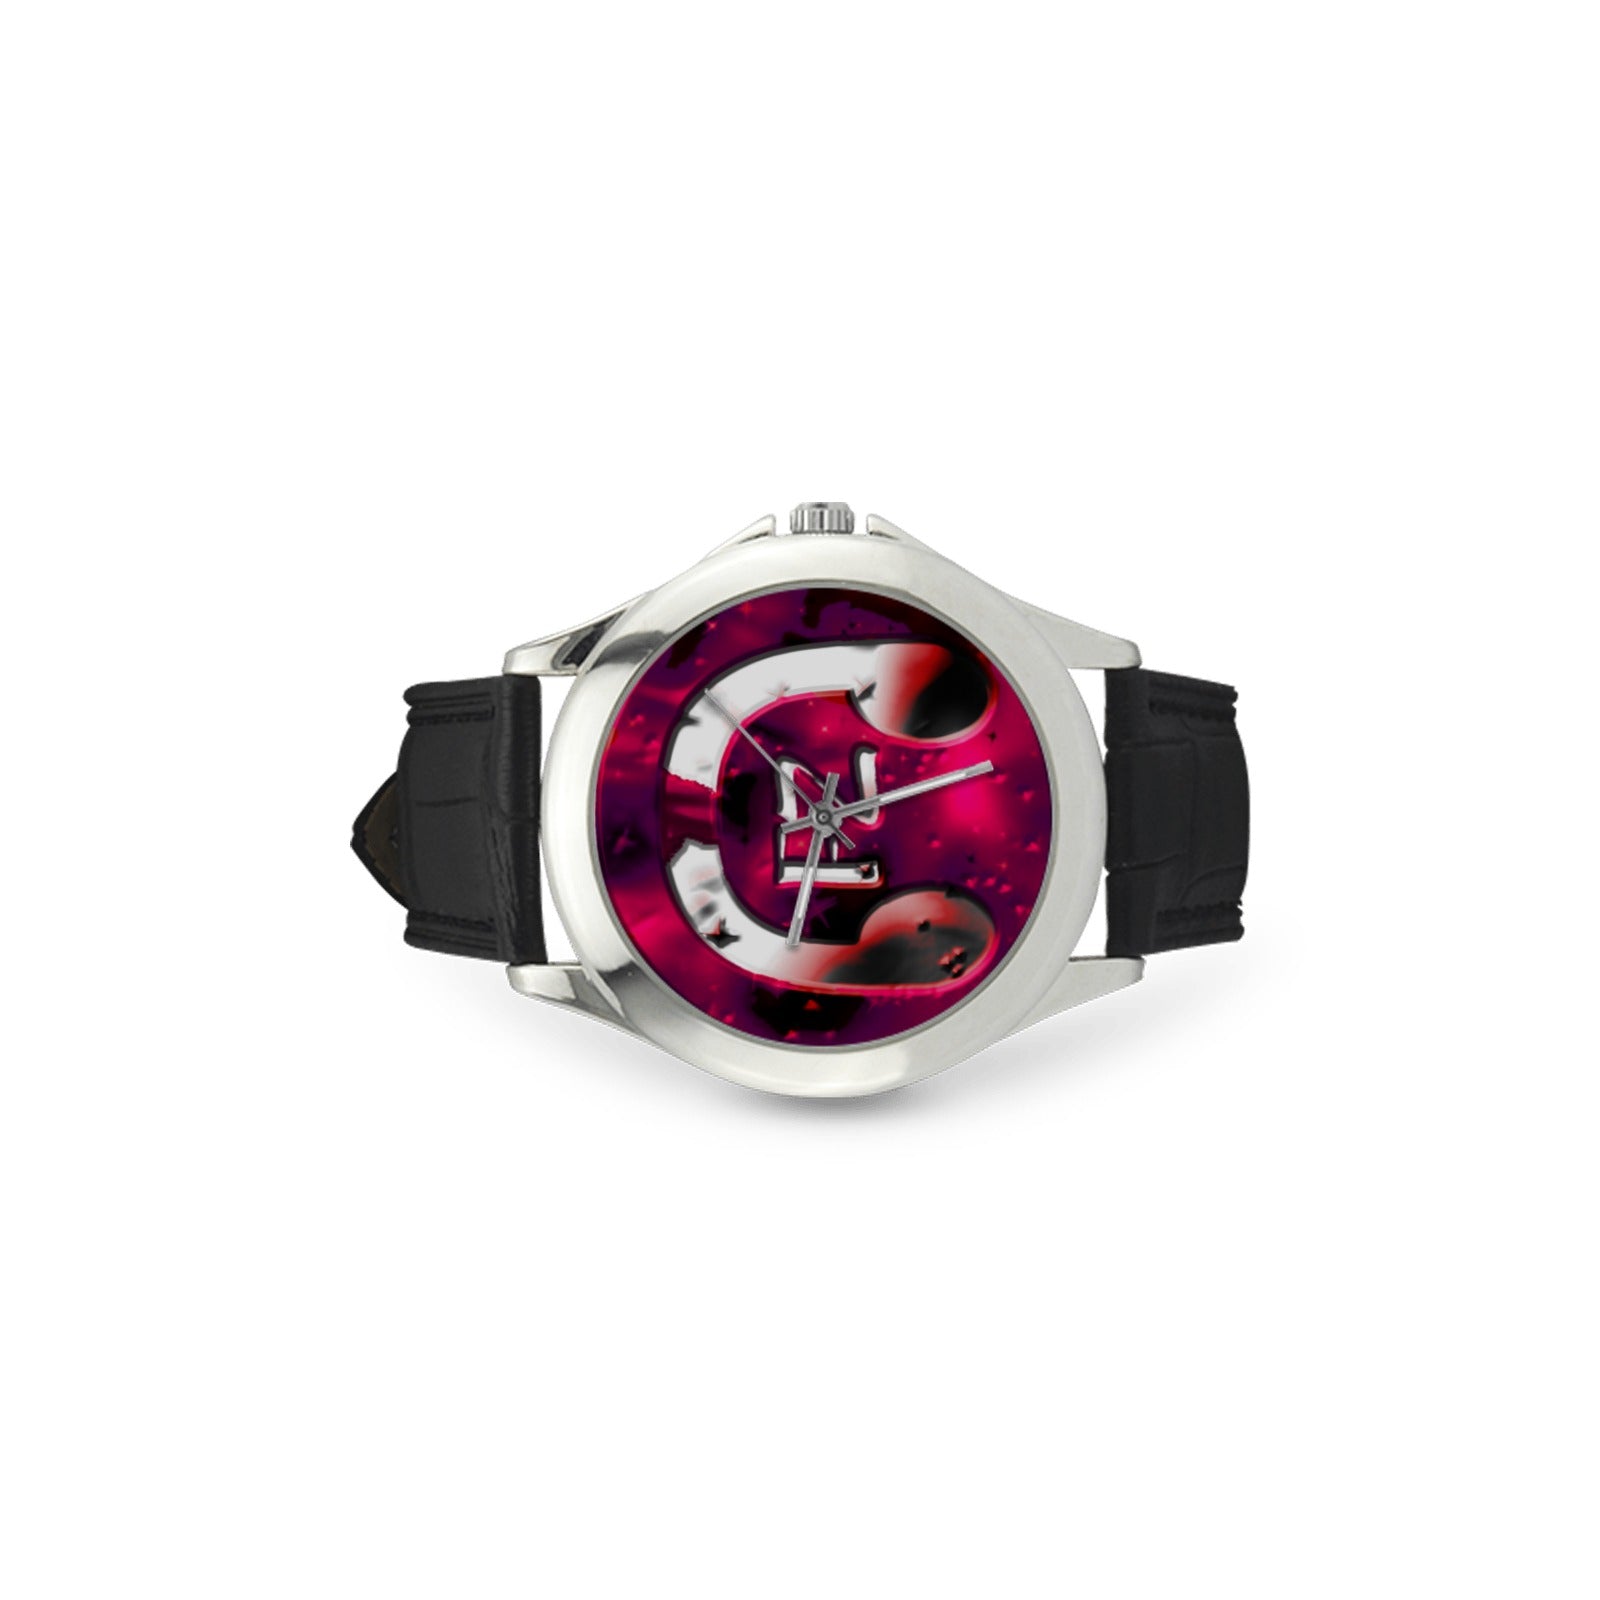 fz women's watch - red women's classic leather strap watch (model 203)